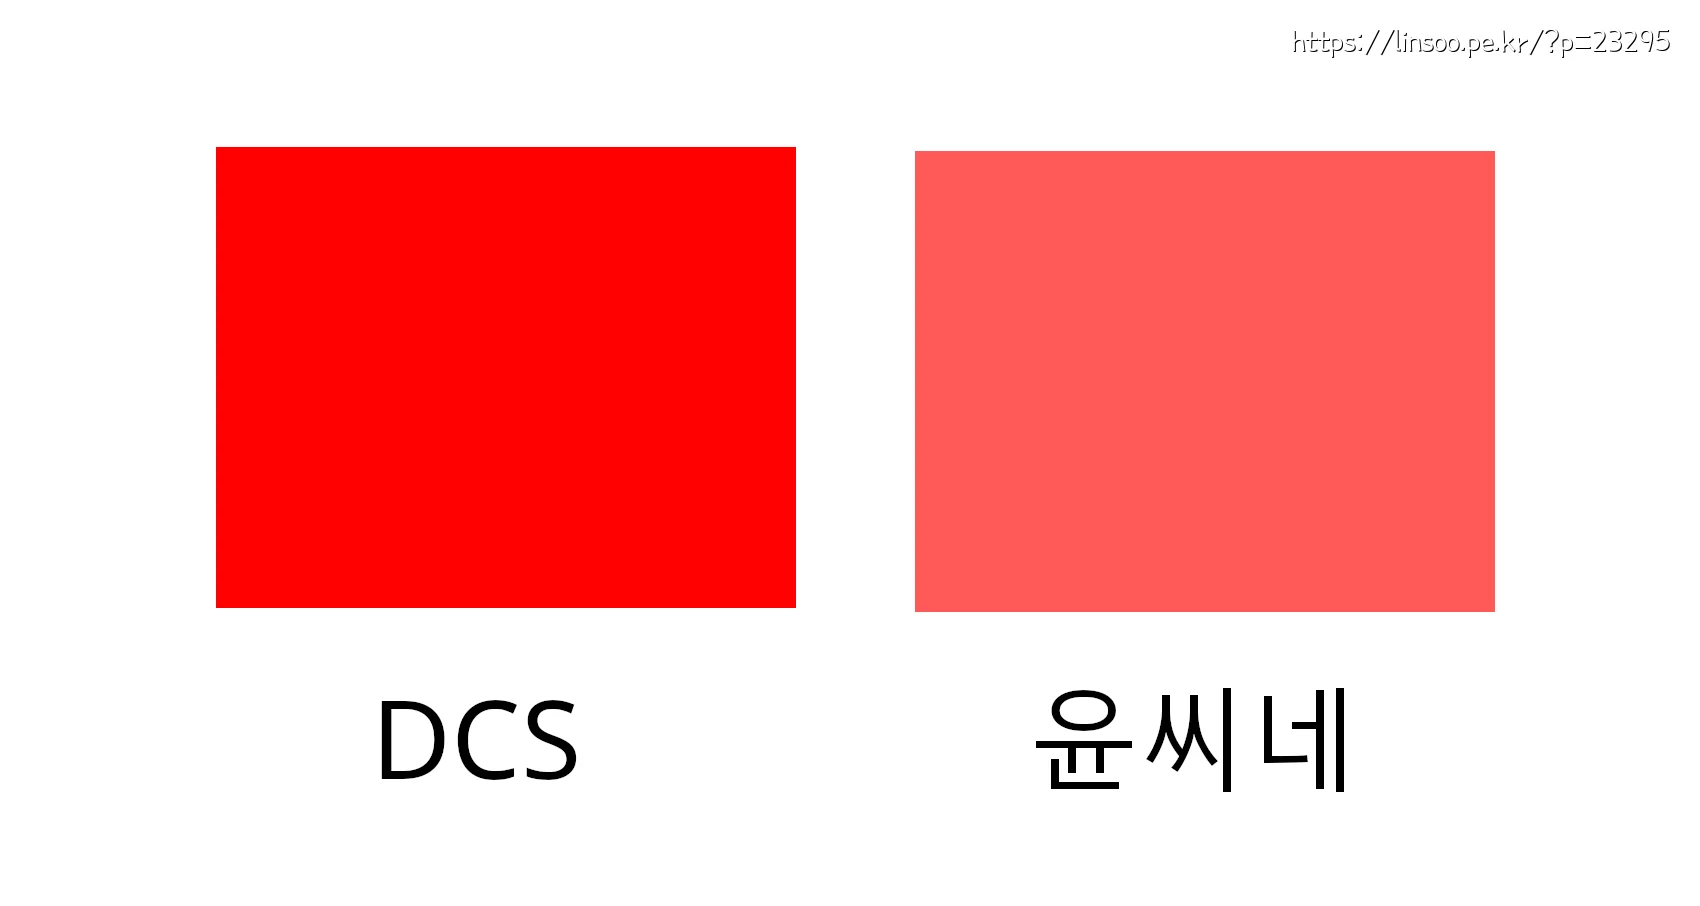 DCS랑 윤씨네 색감 차이